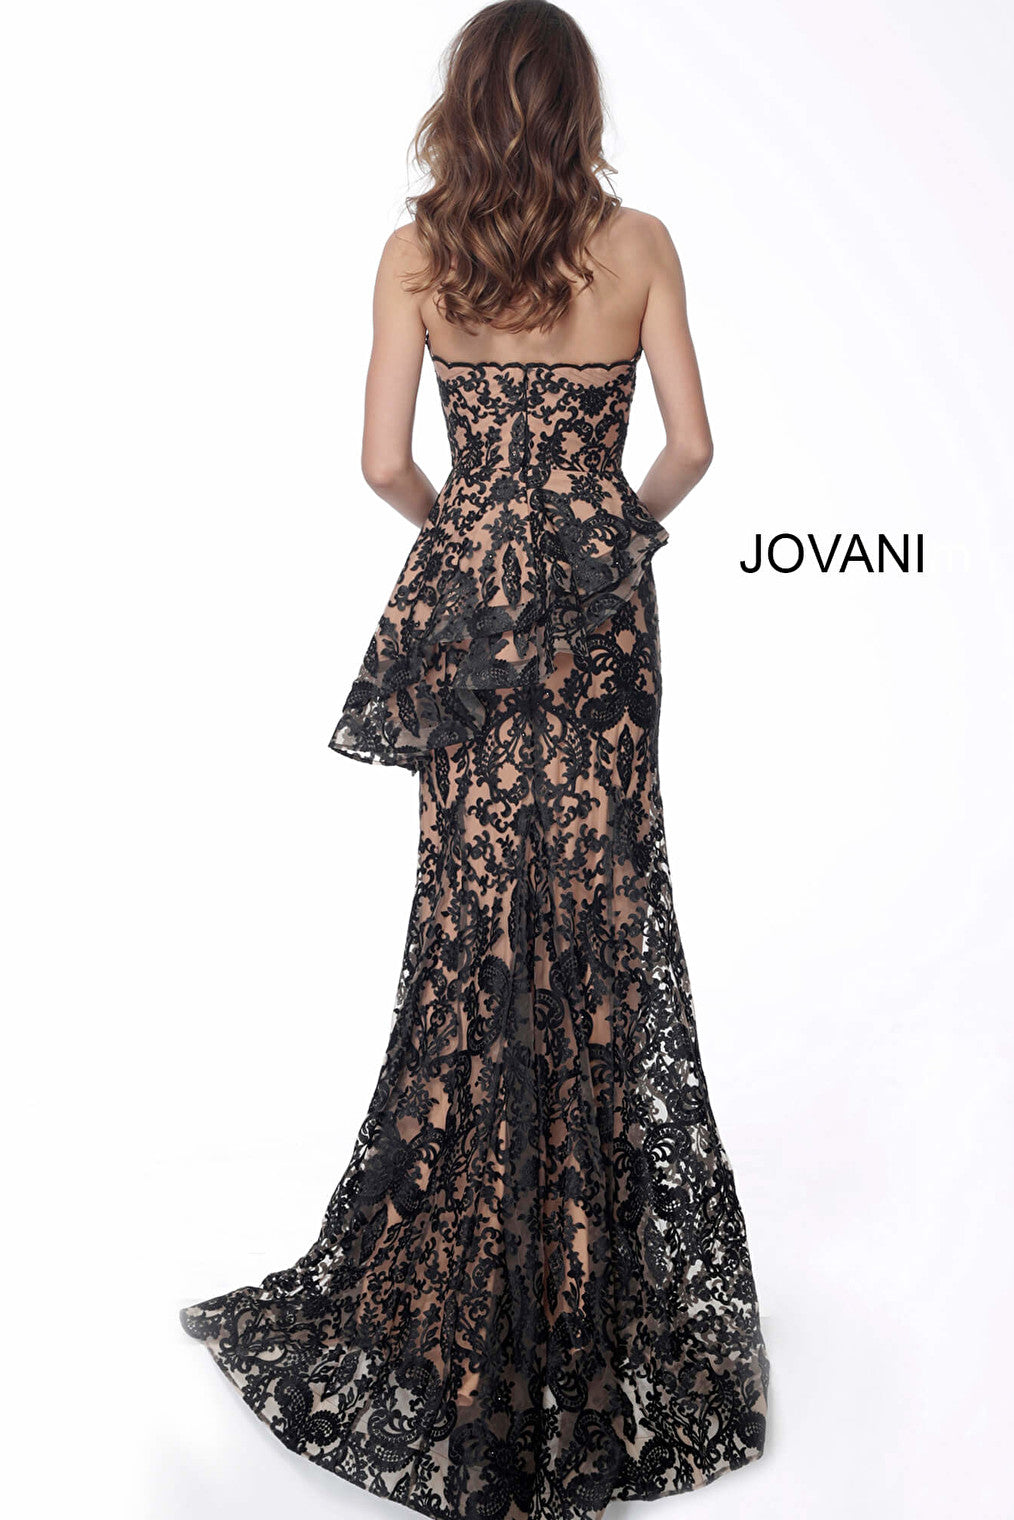 Jovani black evening dress 61524 back view